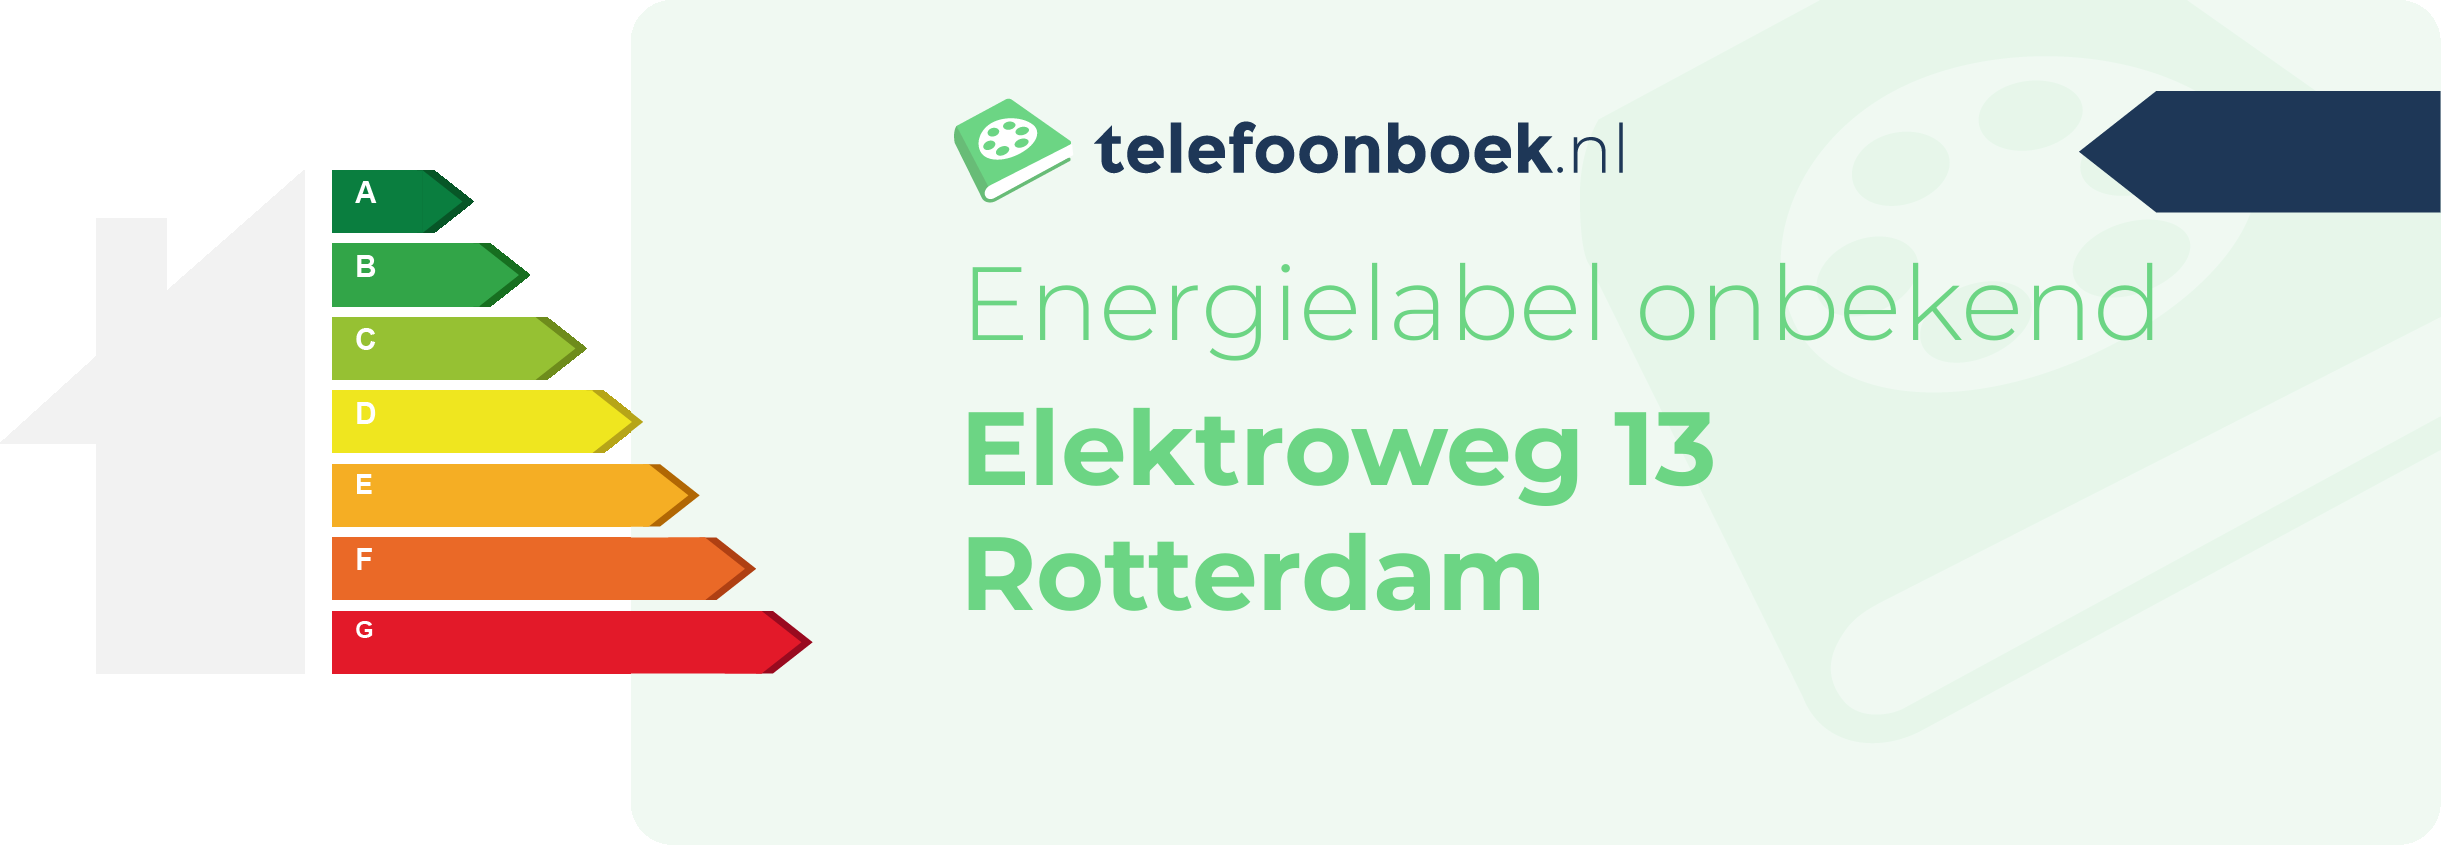 Energielabel Elektroweg 13 Rotterdam